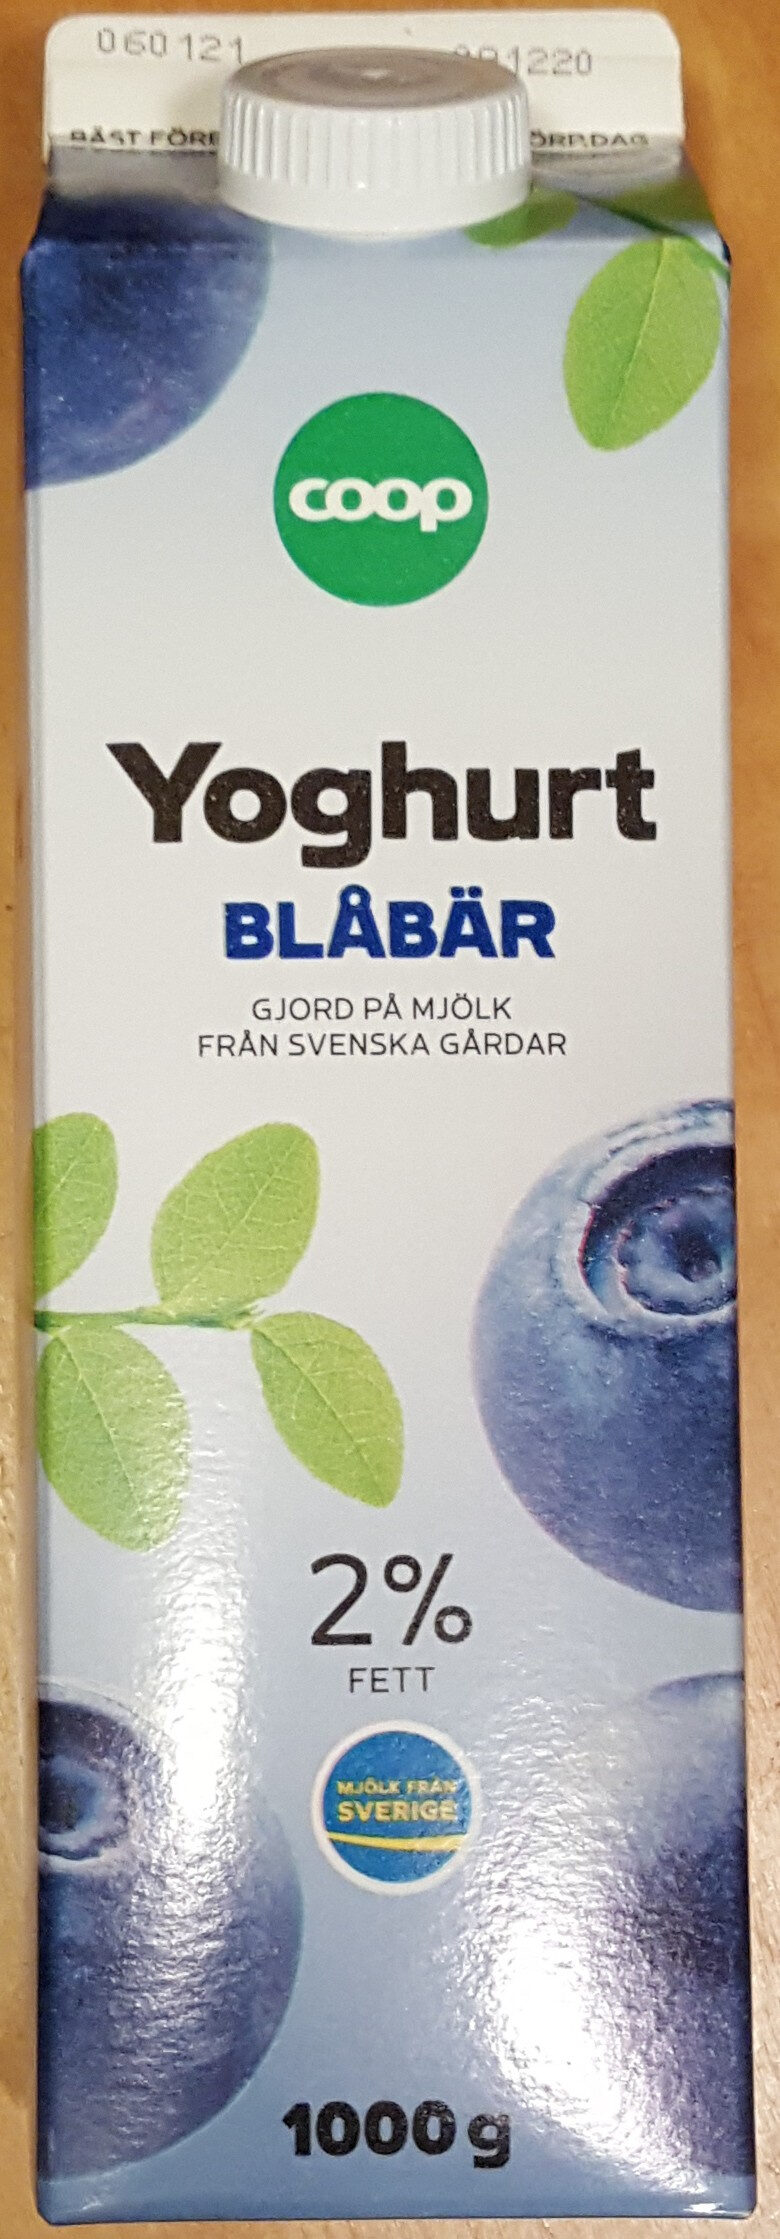 Yoghurt Blåbär - Produkt - sv